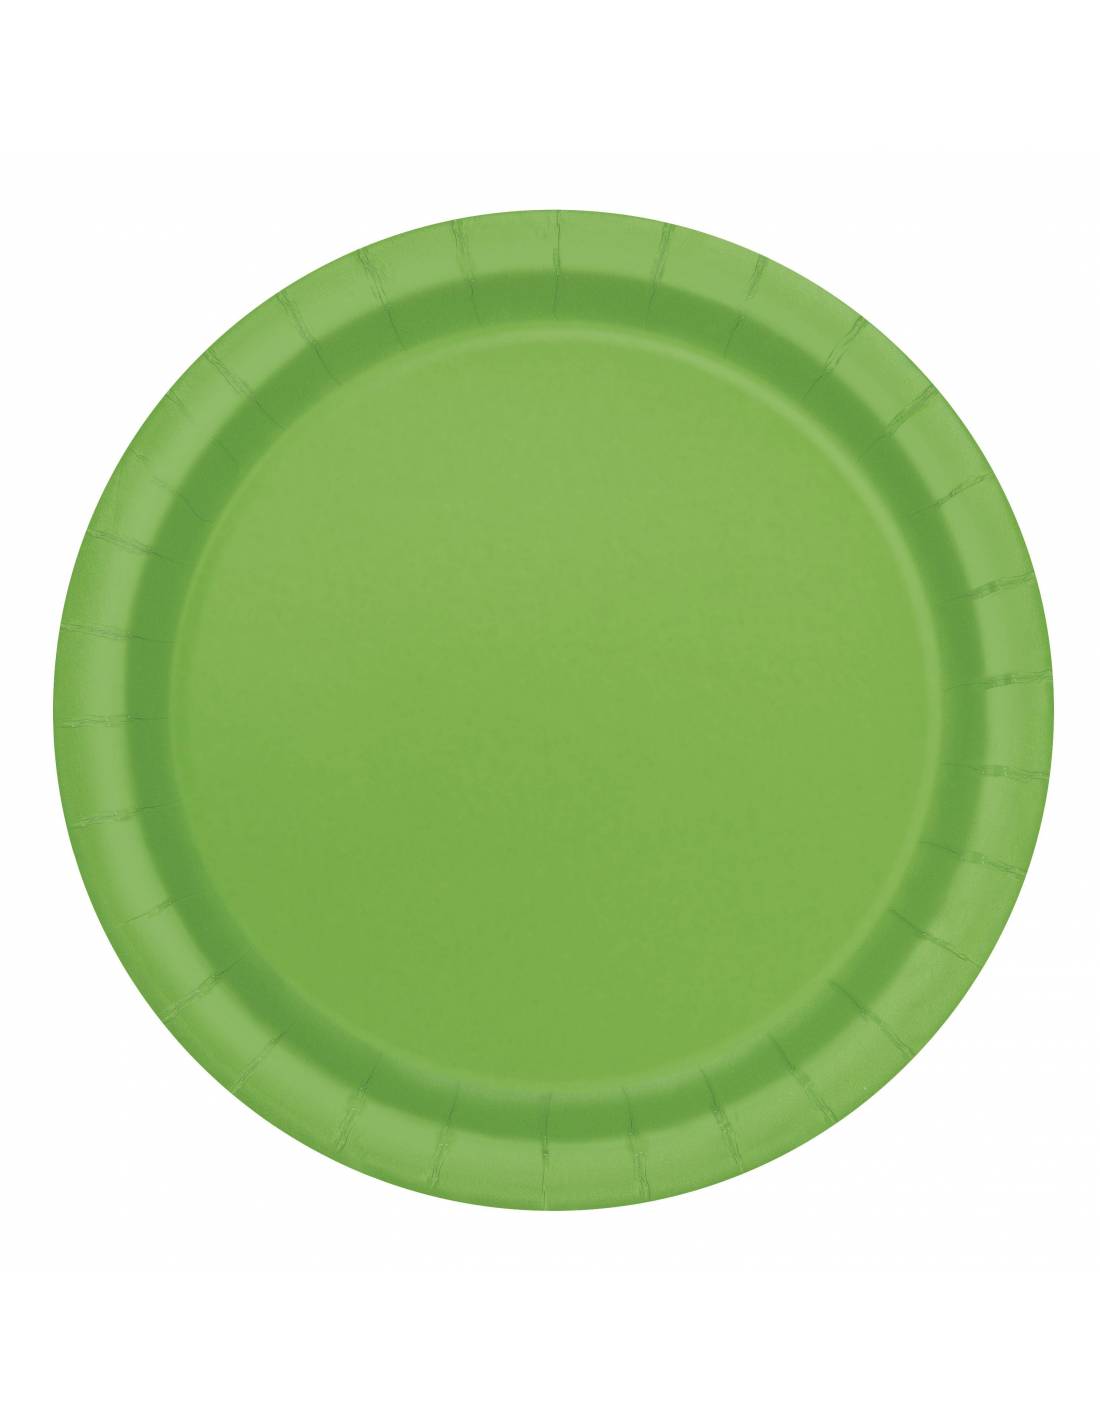 Eco lime green basic plate